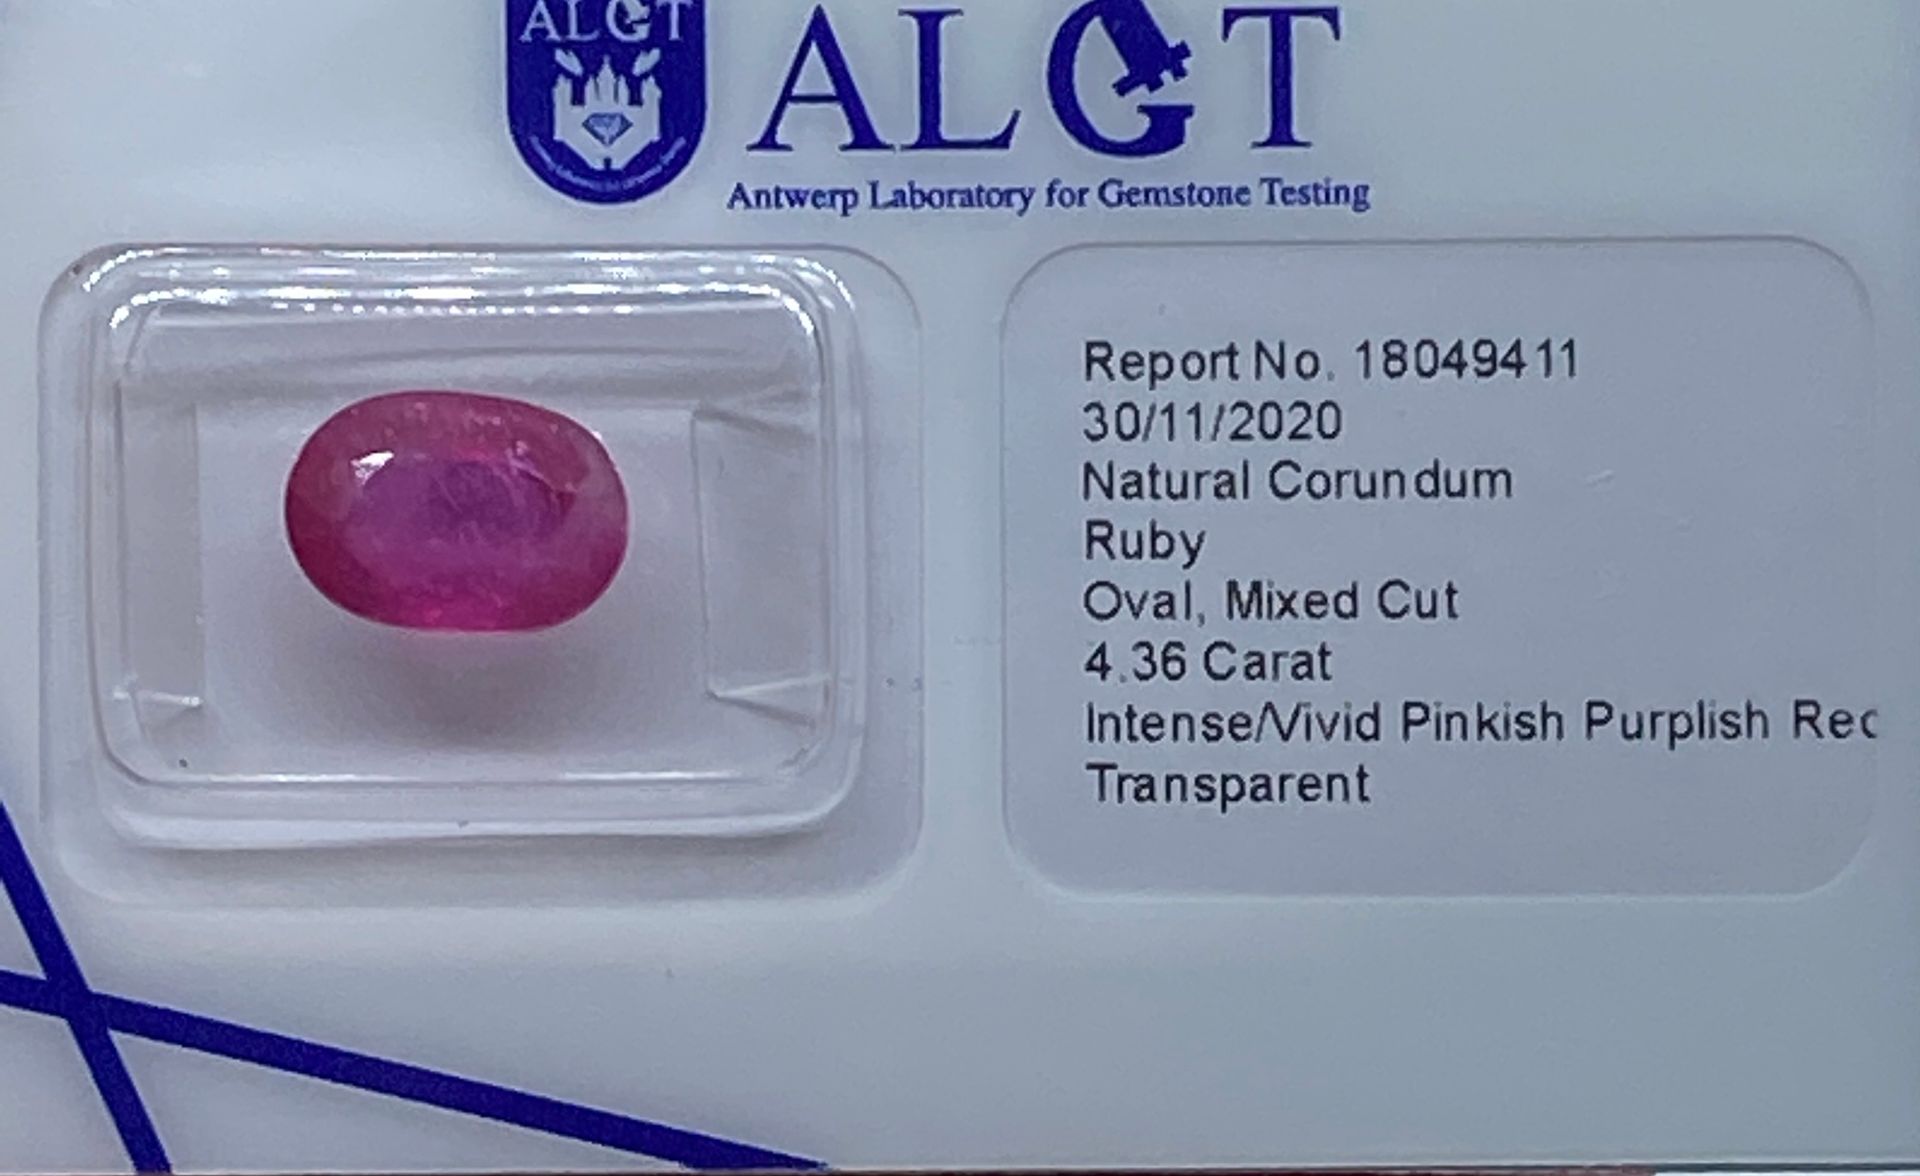 RUBIS RUBIS ROUGE de 4,36 carats certificat de garantie AIGT